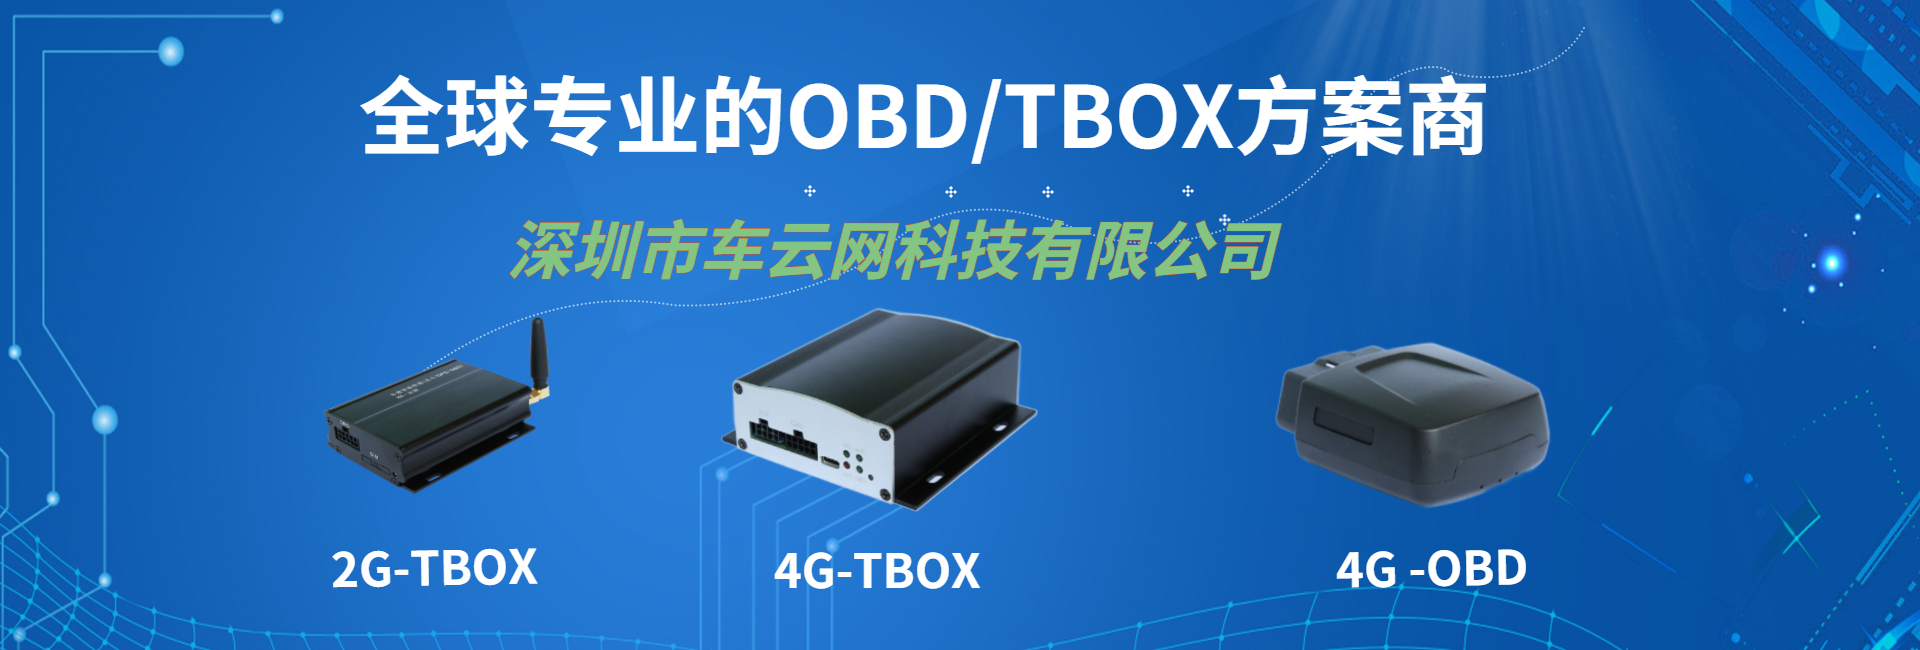 4G-TBOX